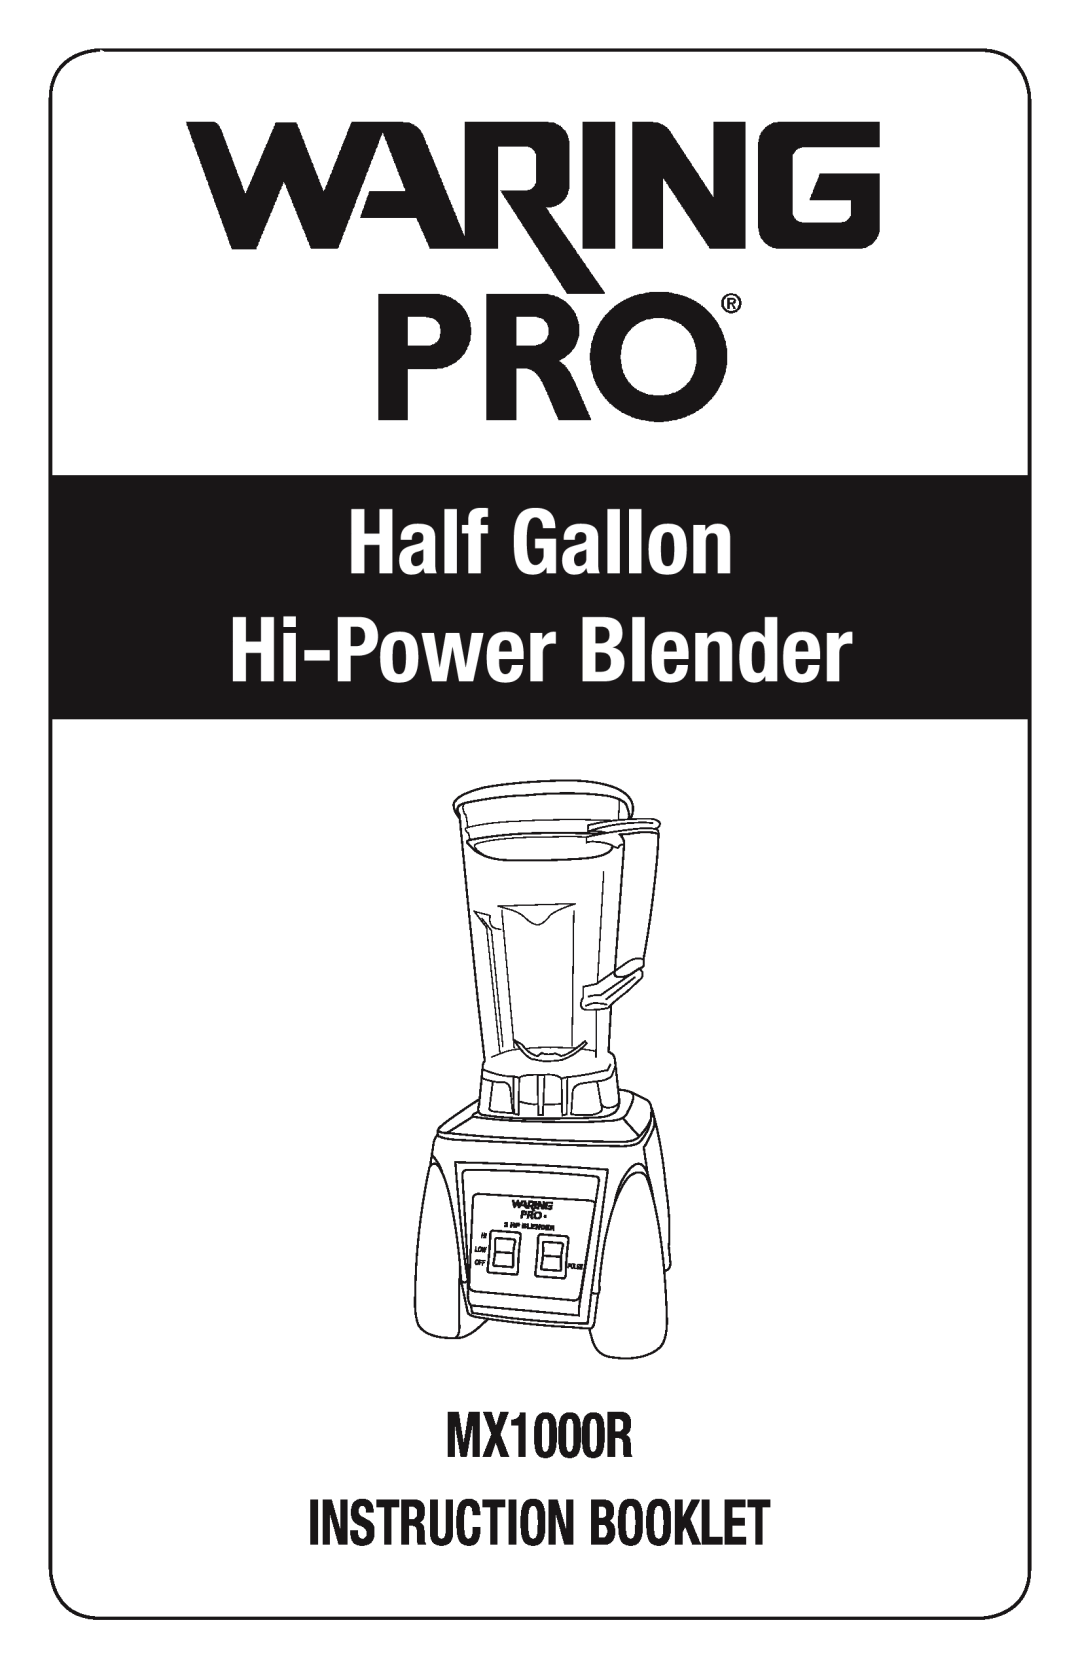 Waring manual Half Gallon Hi-PowerBlender, MX1000R INSTRUCTION BOOKLET 